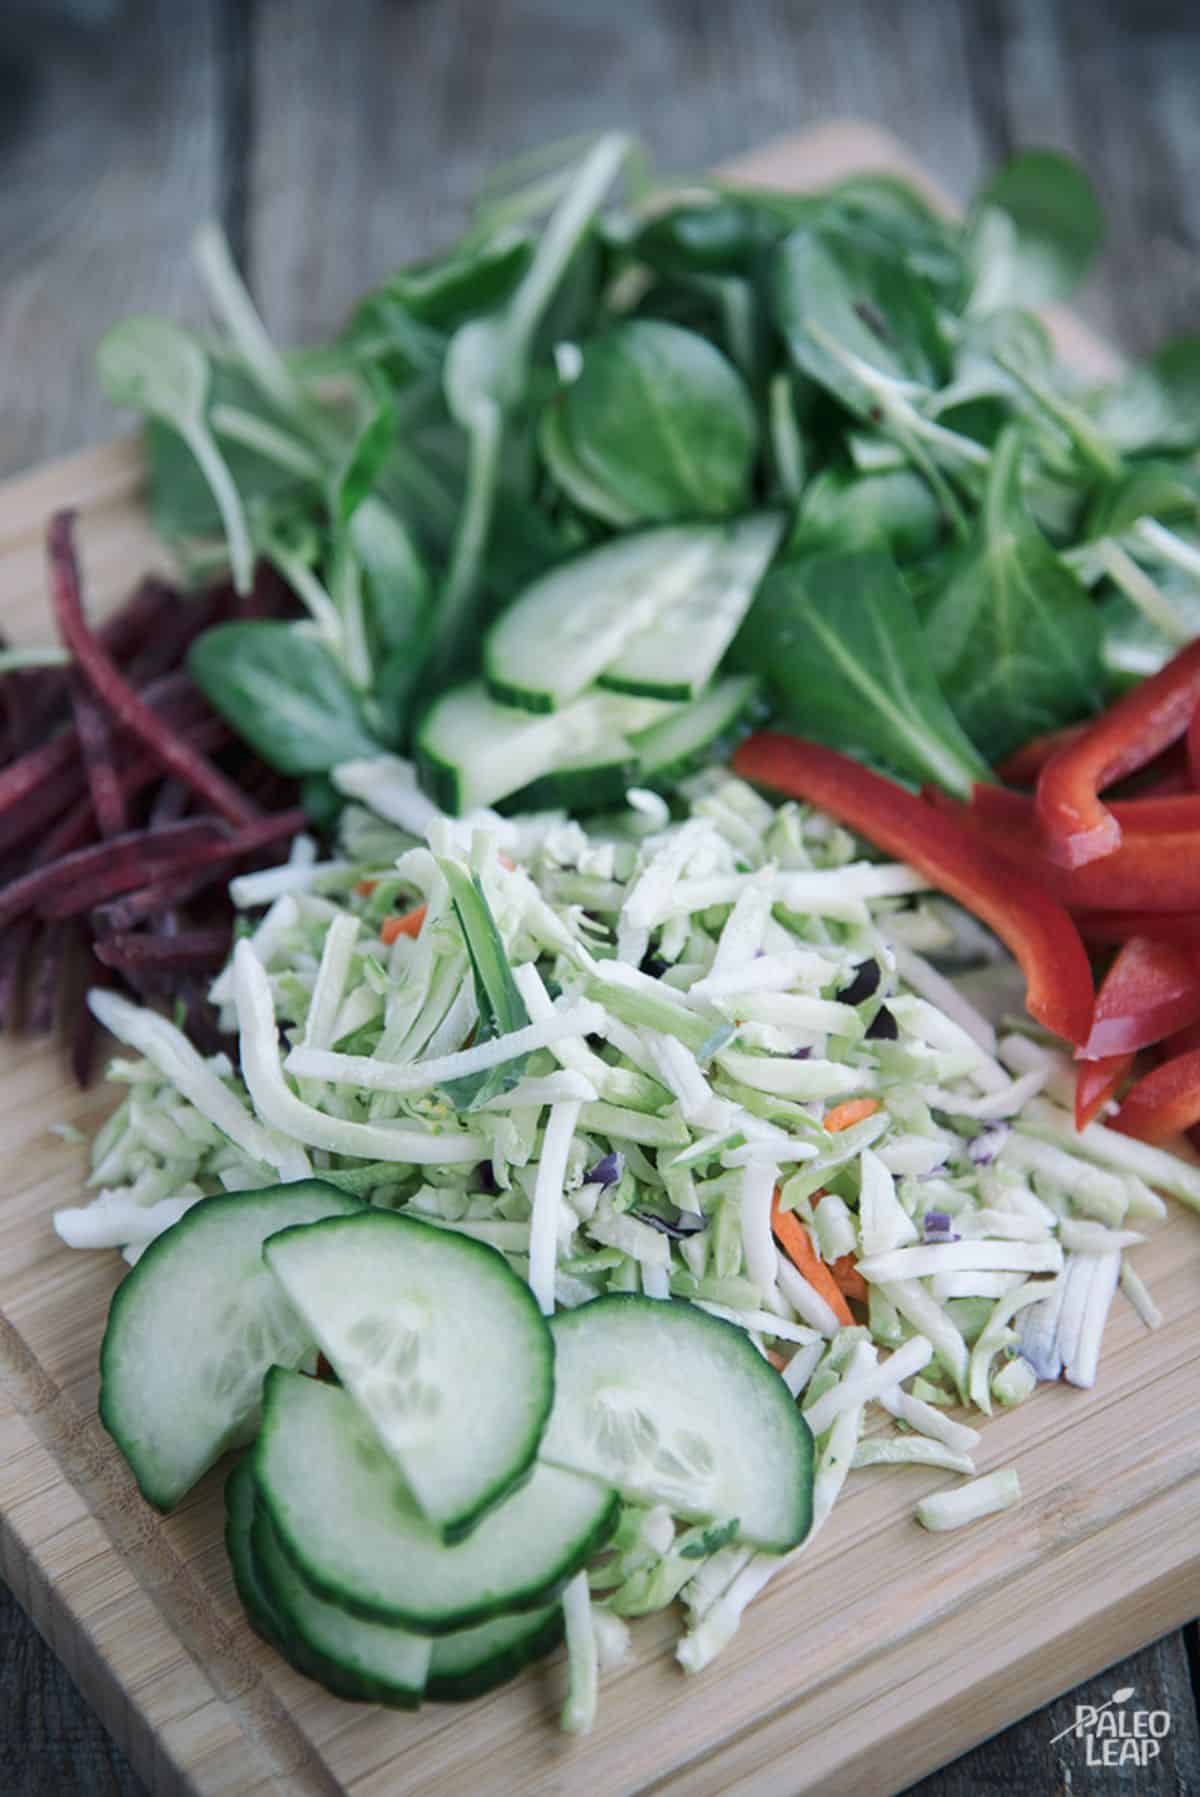 Beet Broccoli And Mache Salad With Almond Vinaigrette Recipe Preparation